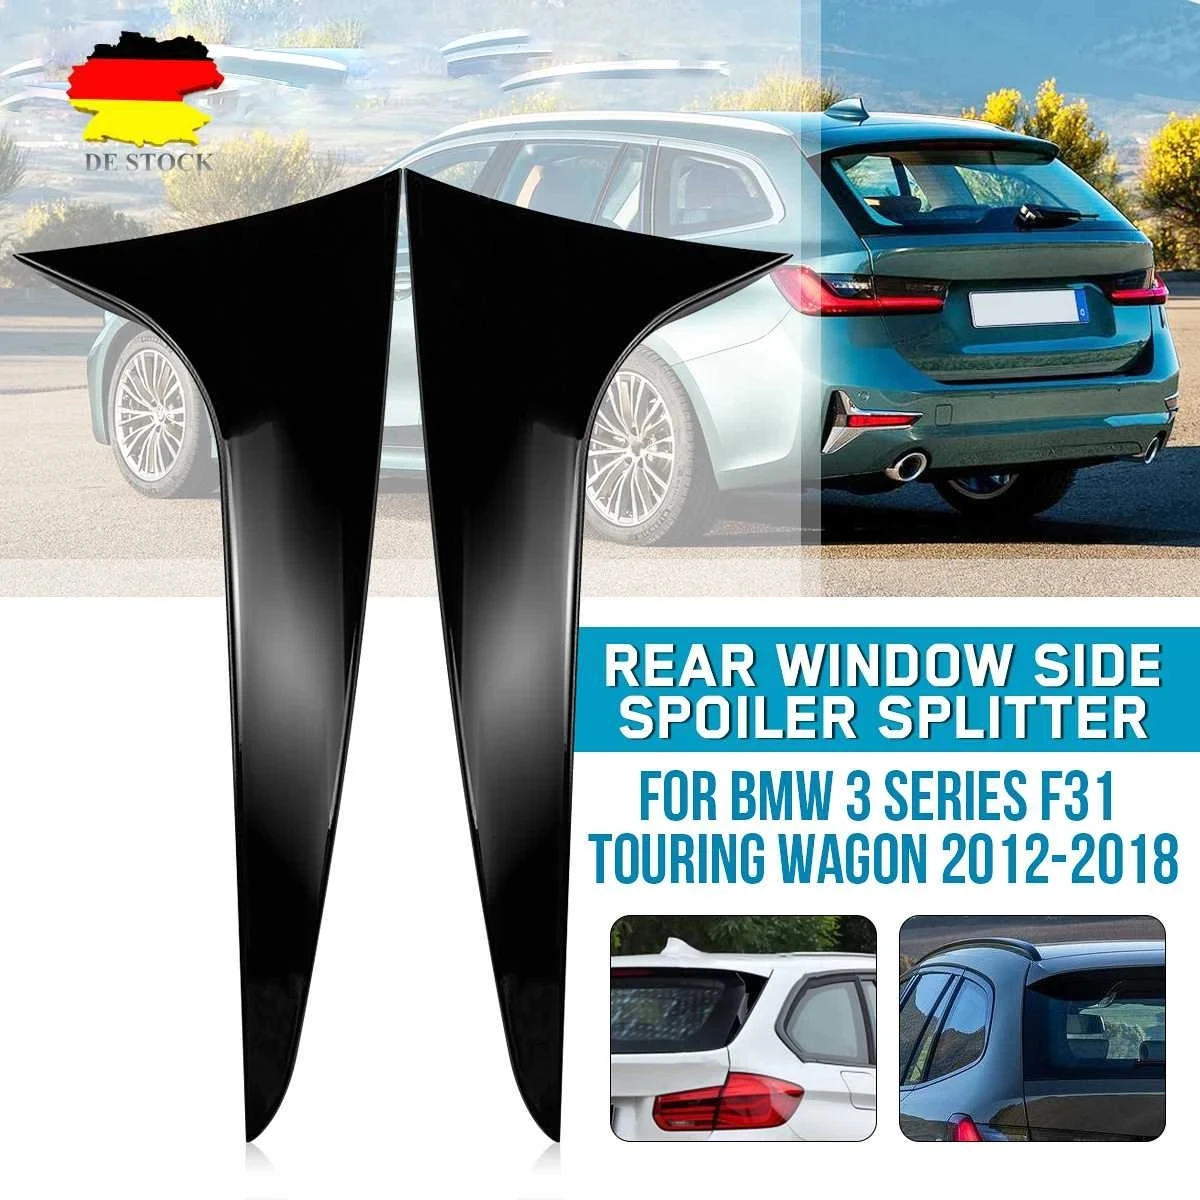 

Car Rear Window Side Spoiler For BMW 3 Series 320i 328i 330i 320d 330d Wagon F31 2012-2018 Rear Side Spoiler Canard Splitter